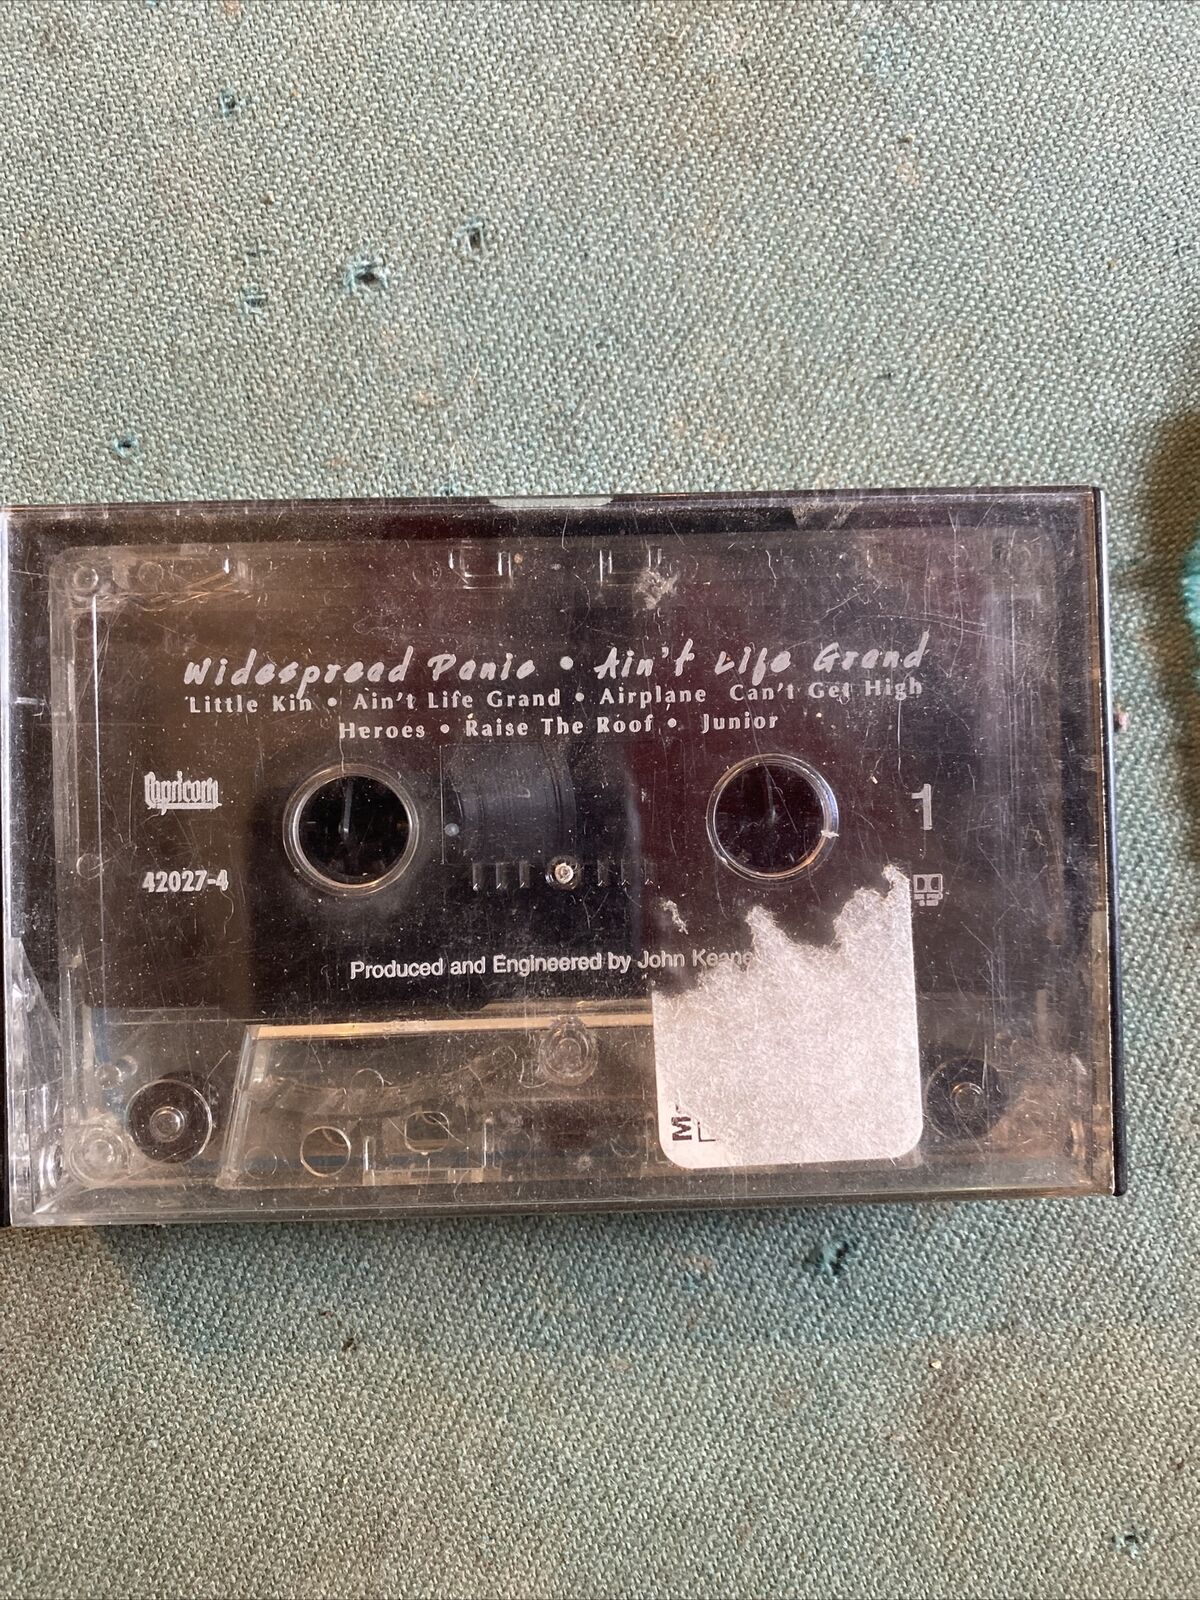 widespread panic aint life grand cassette tape 1994 Loose